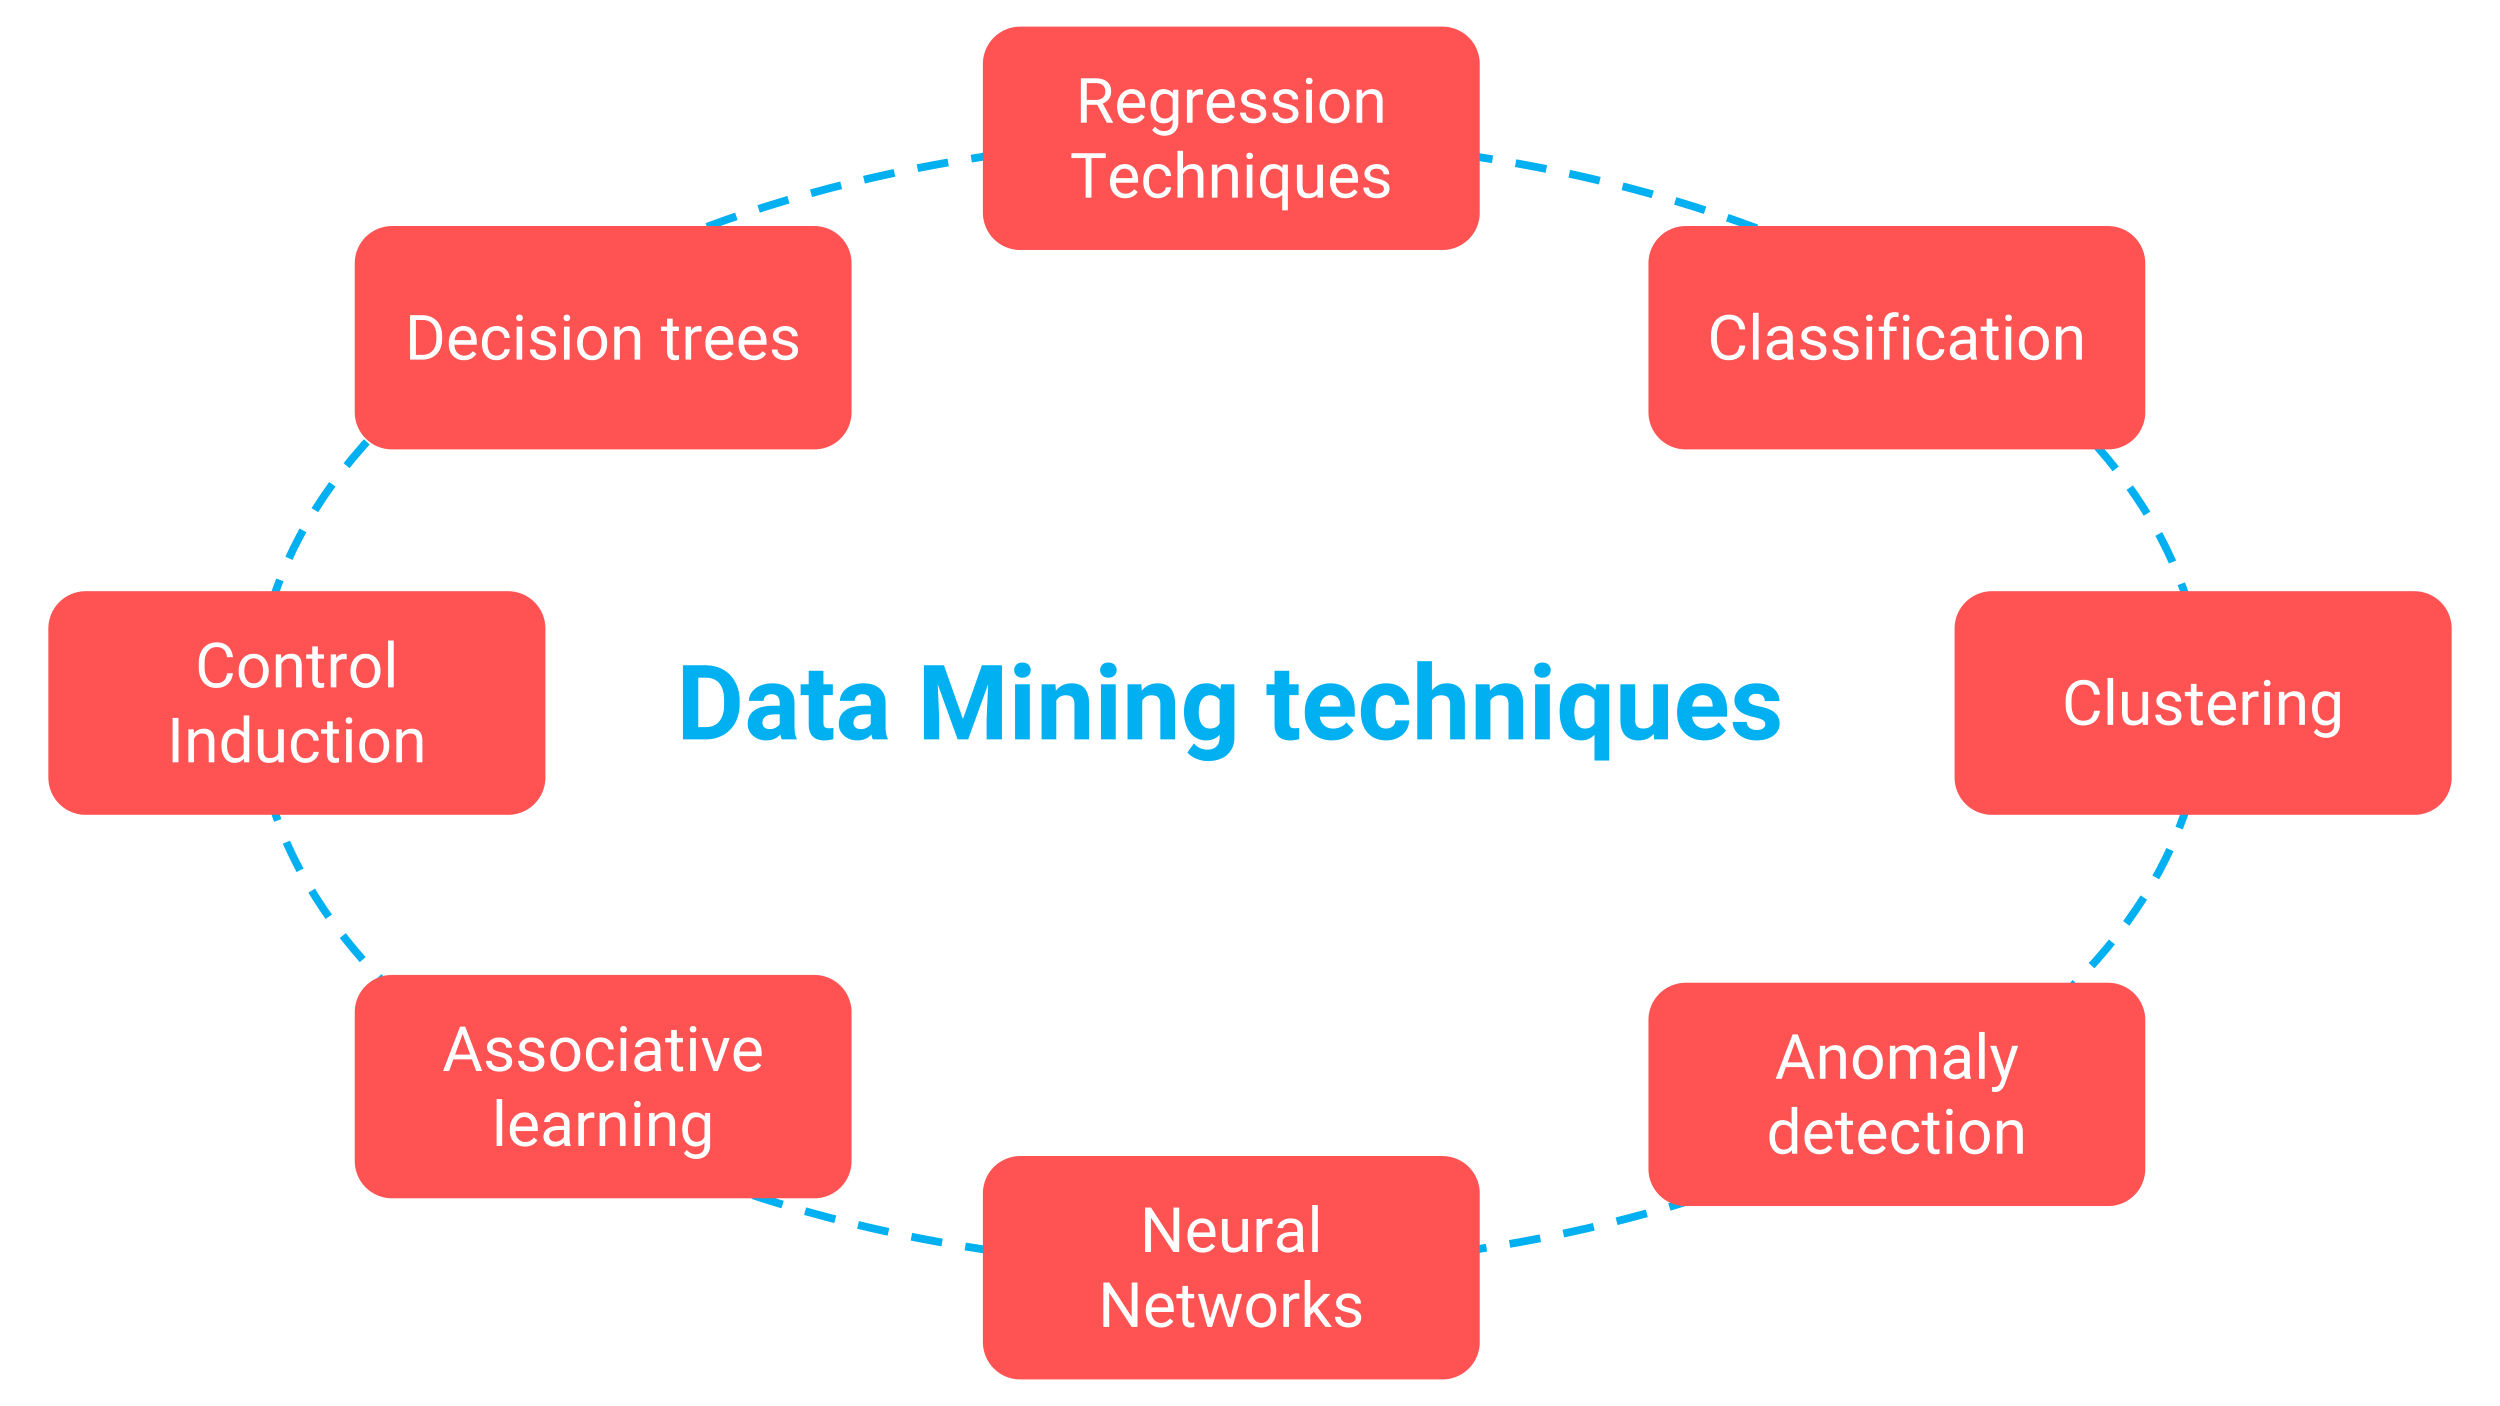 Data mining techniques